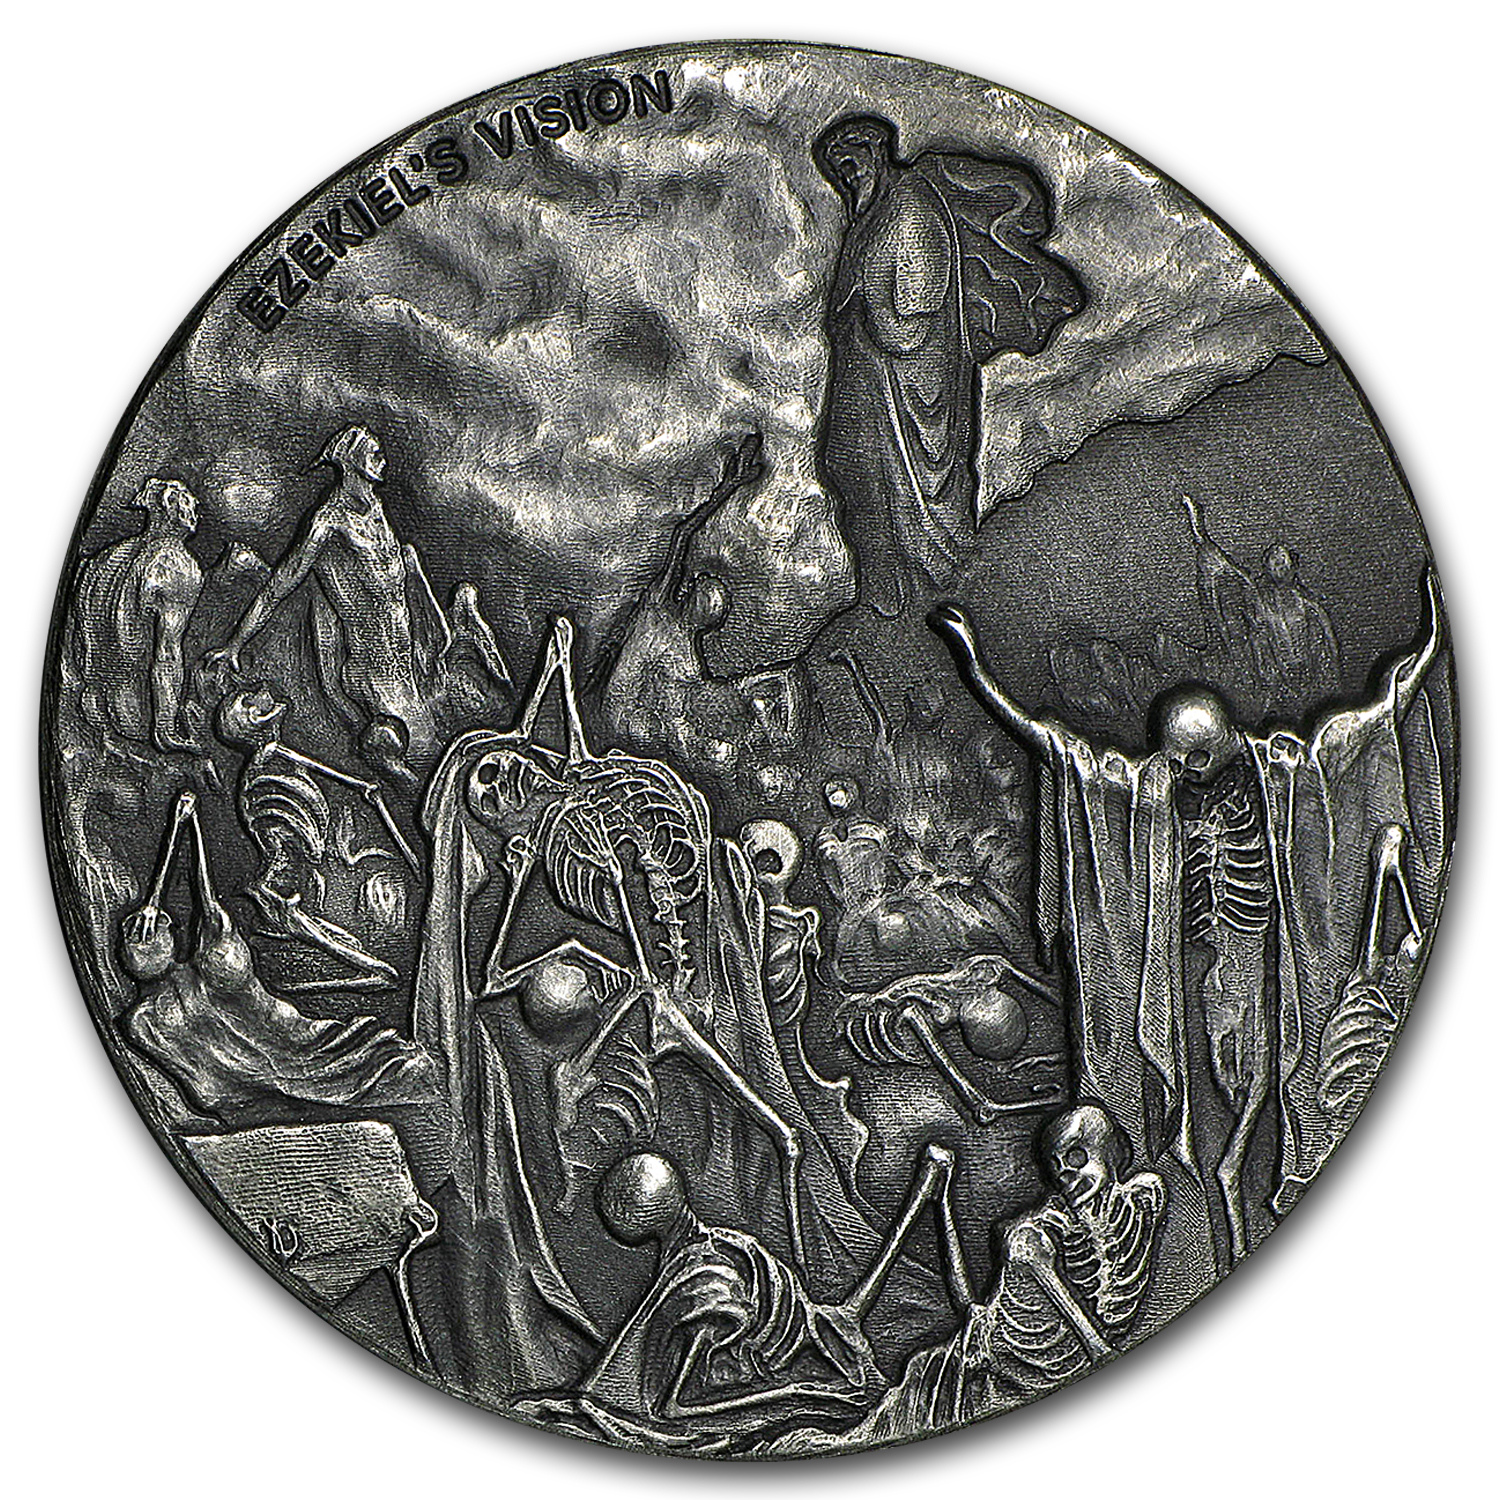 Buy 2016 2 oz Silver Coin - Biblical Series (Valley of Dry Bones)